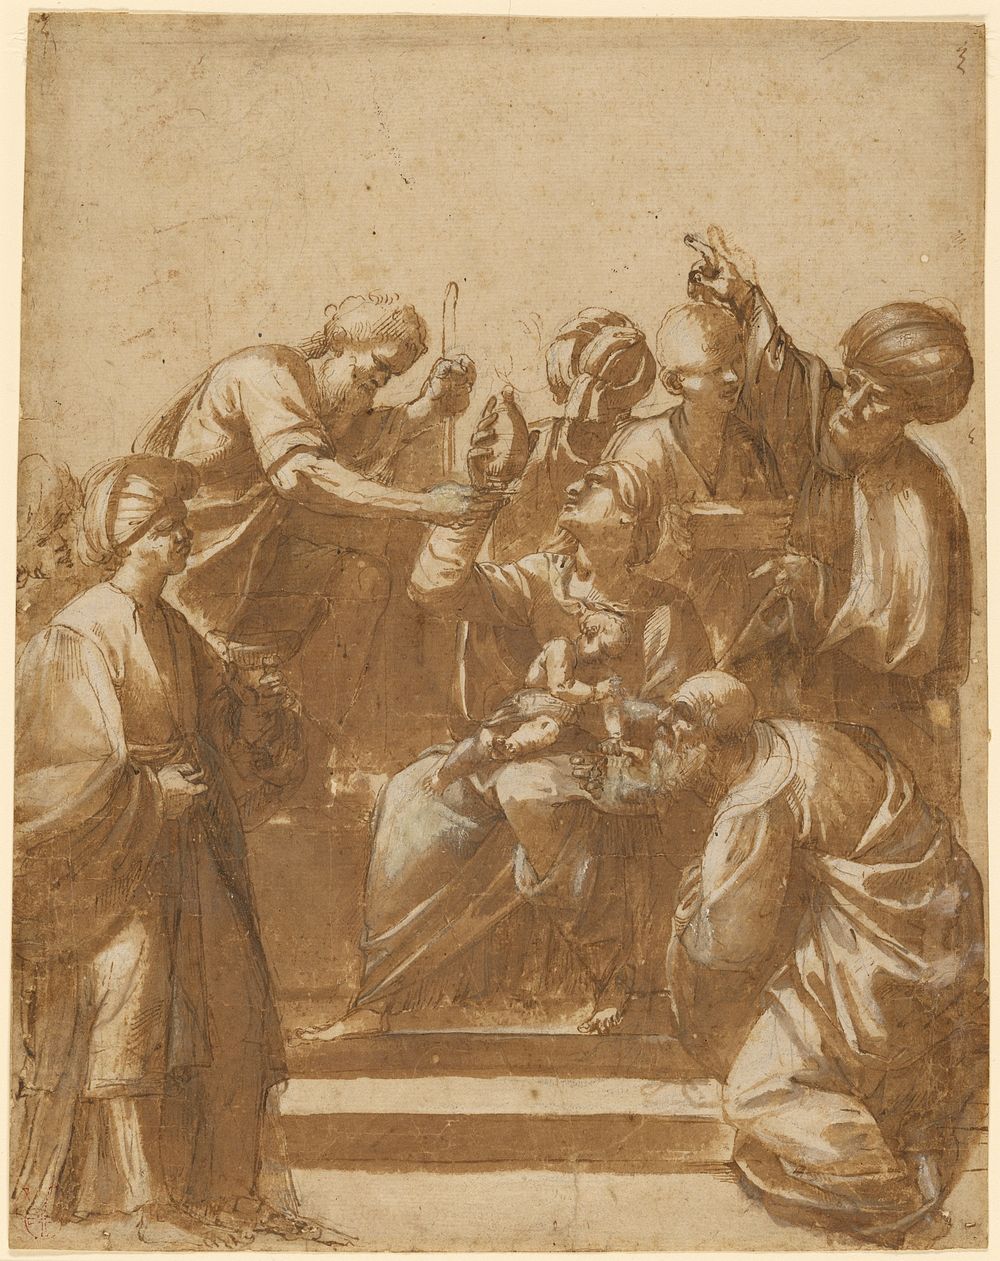 Adoration of the Magi by Jusepe de Ribera